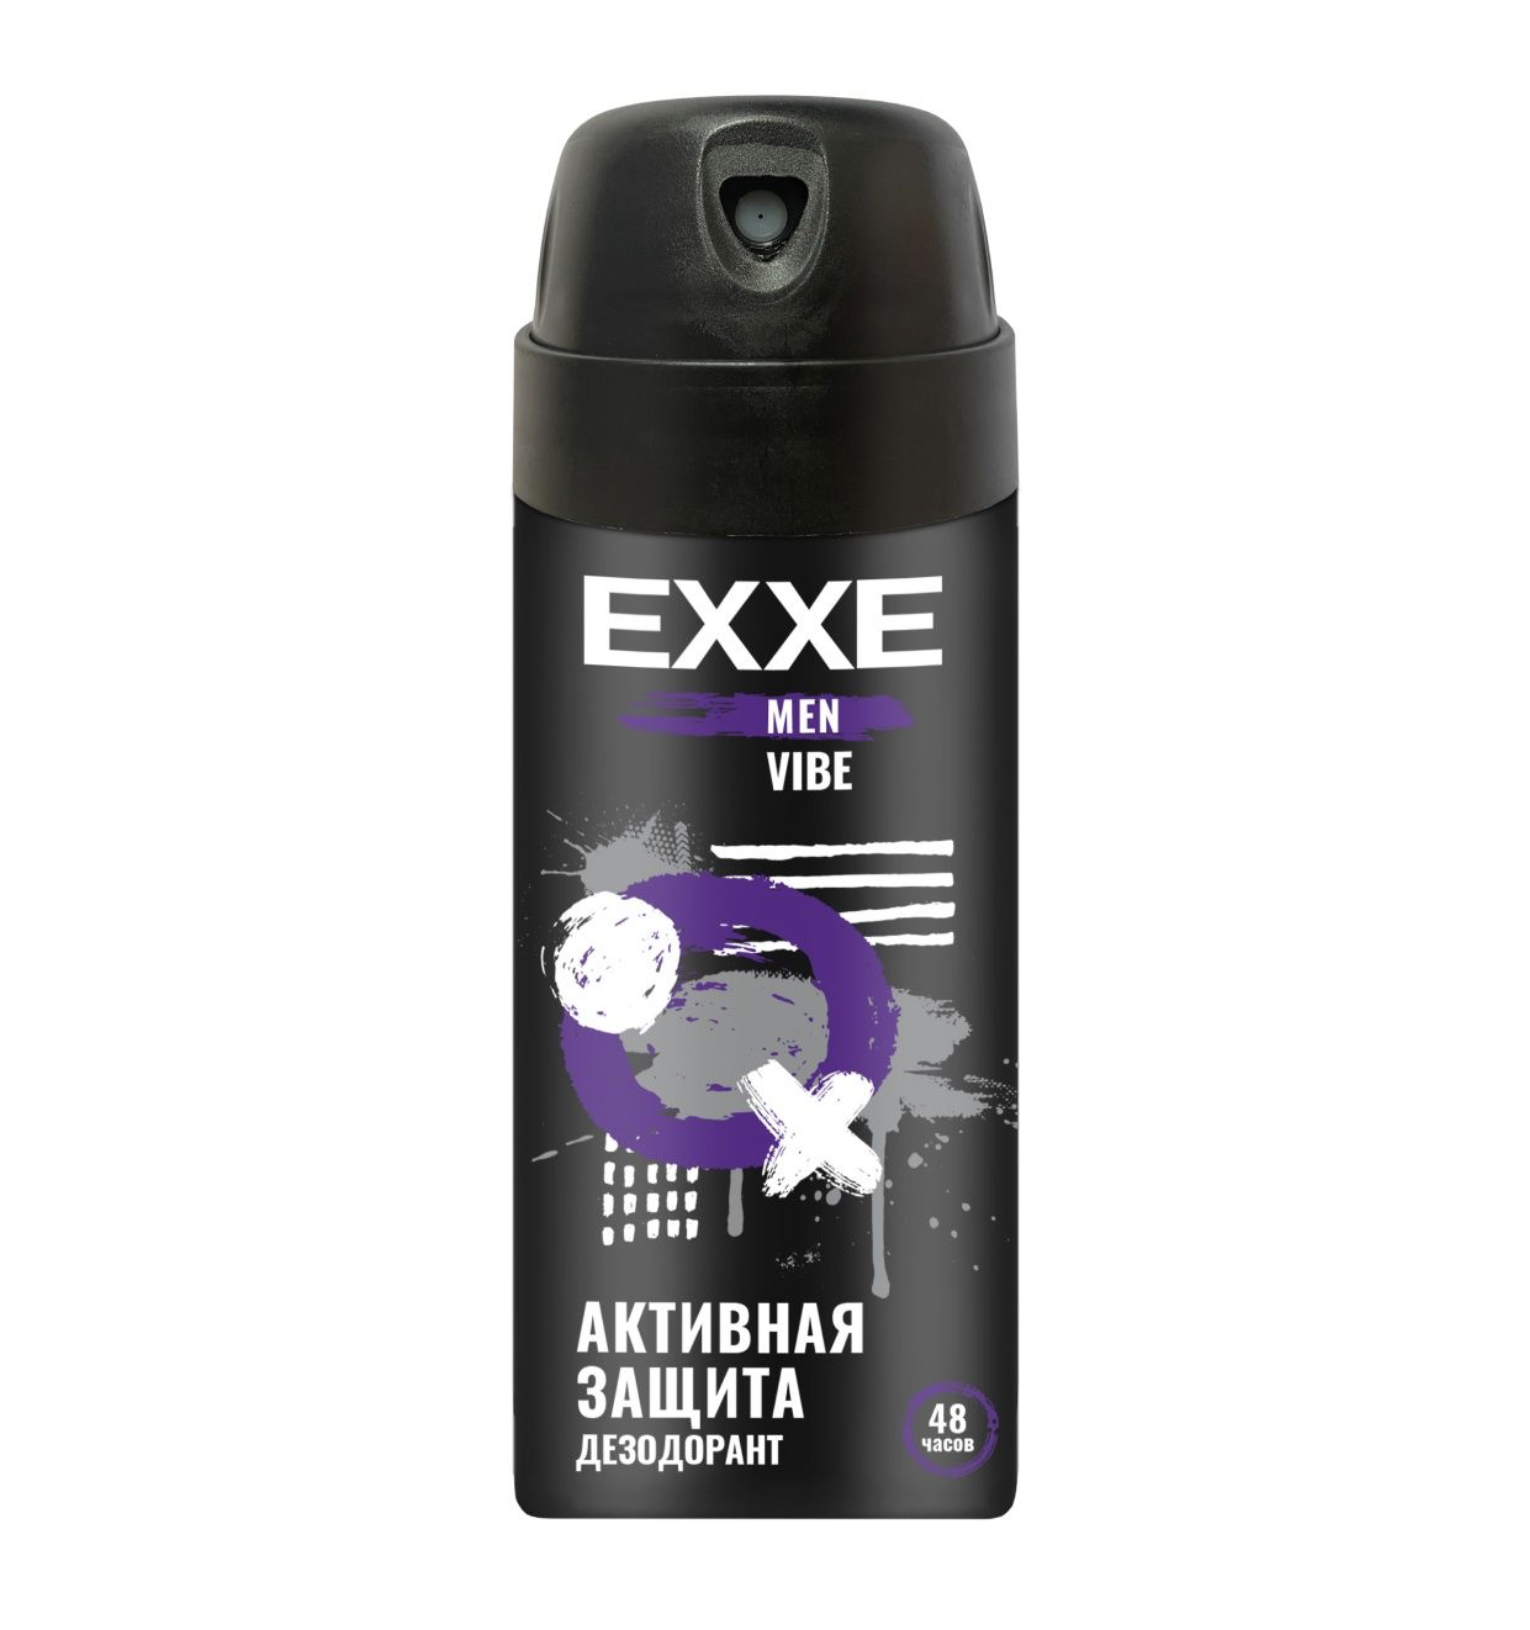   / EXXE Men Vibe -       48 150 